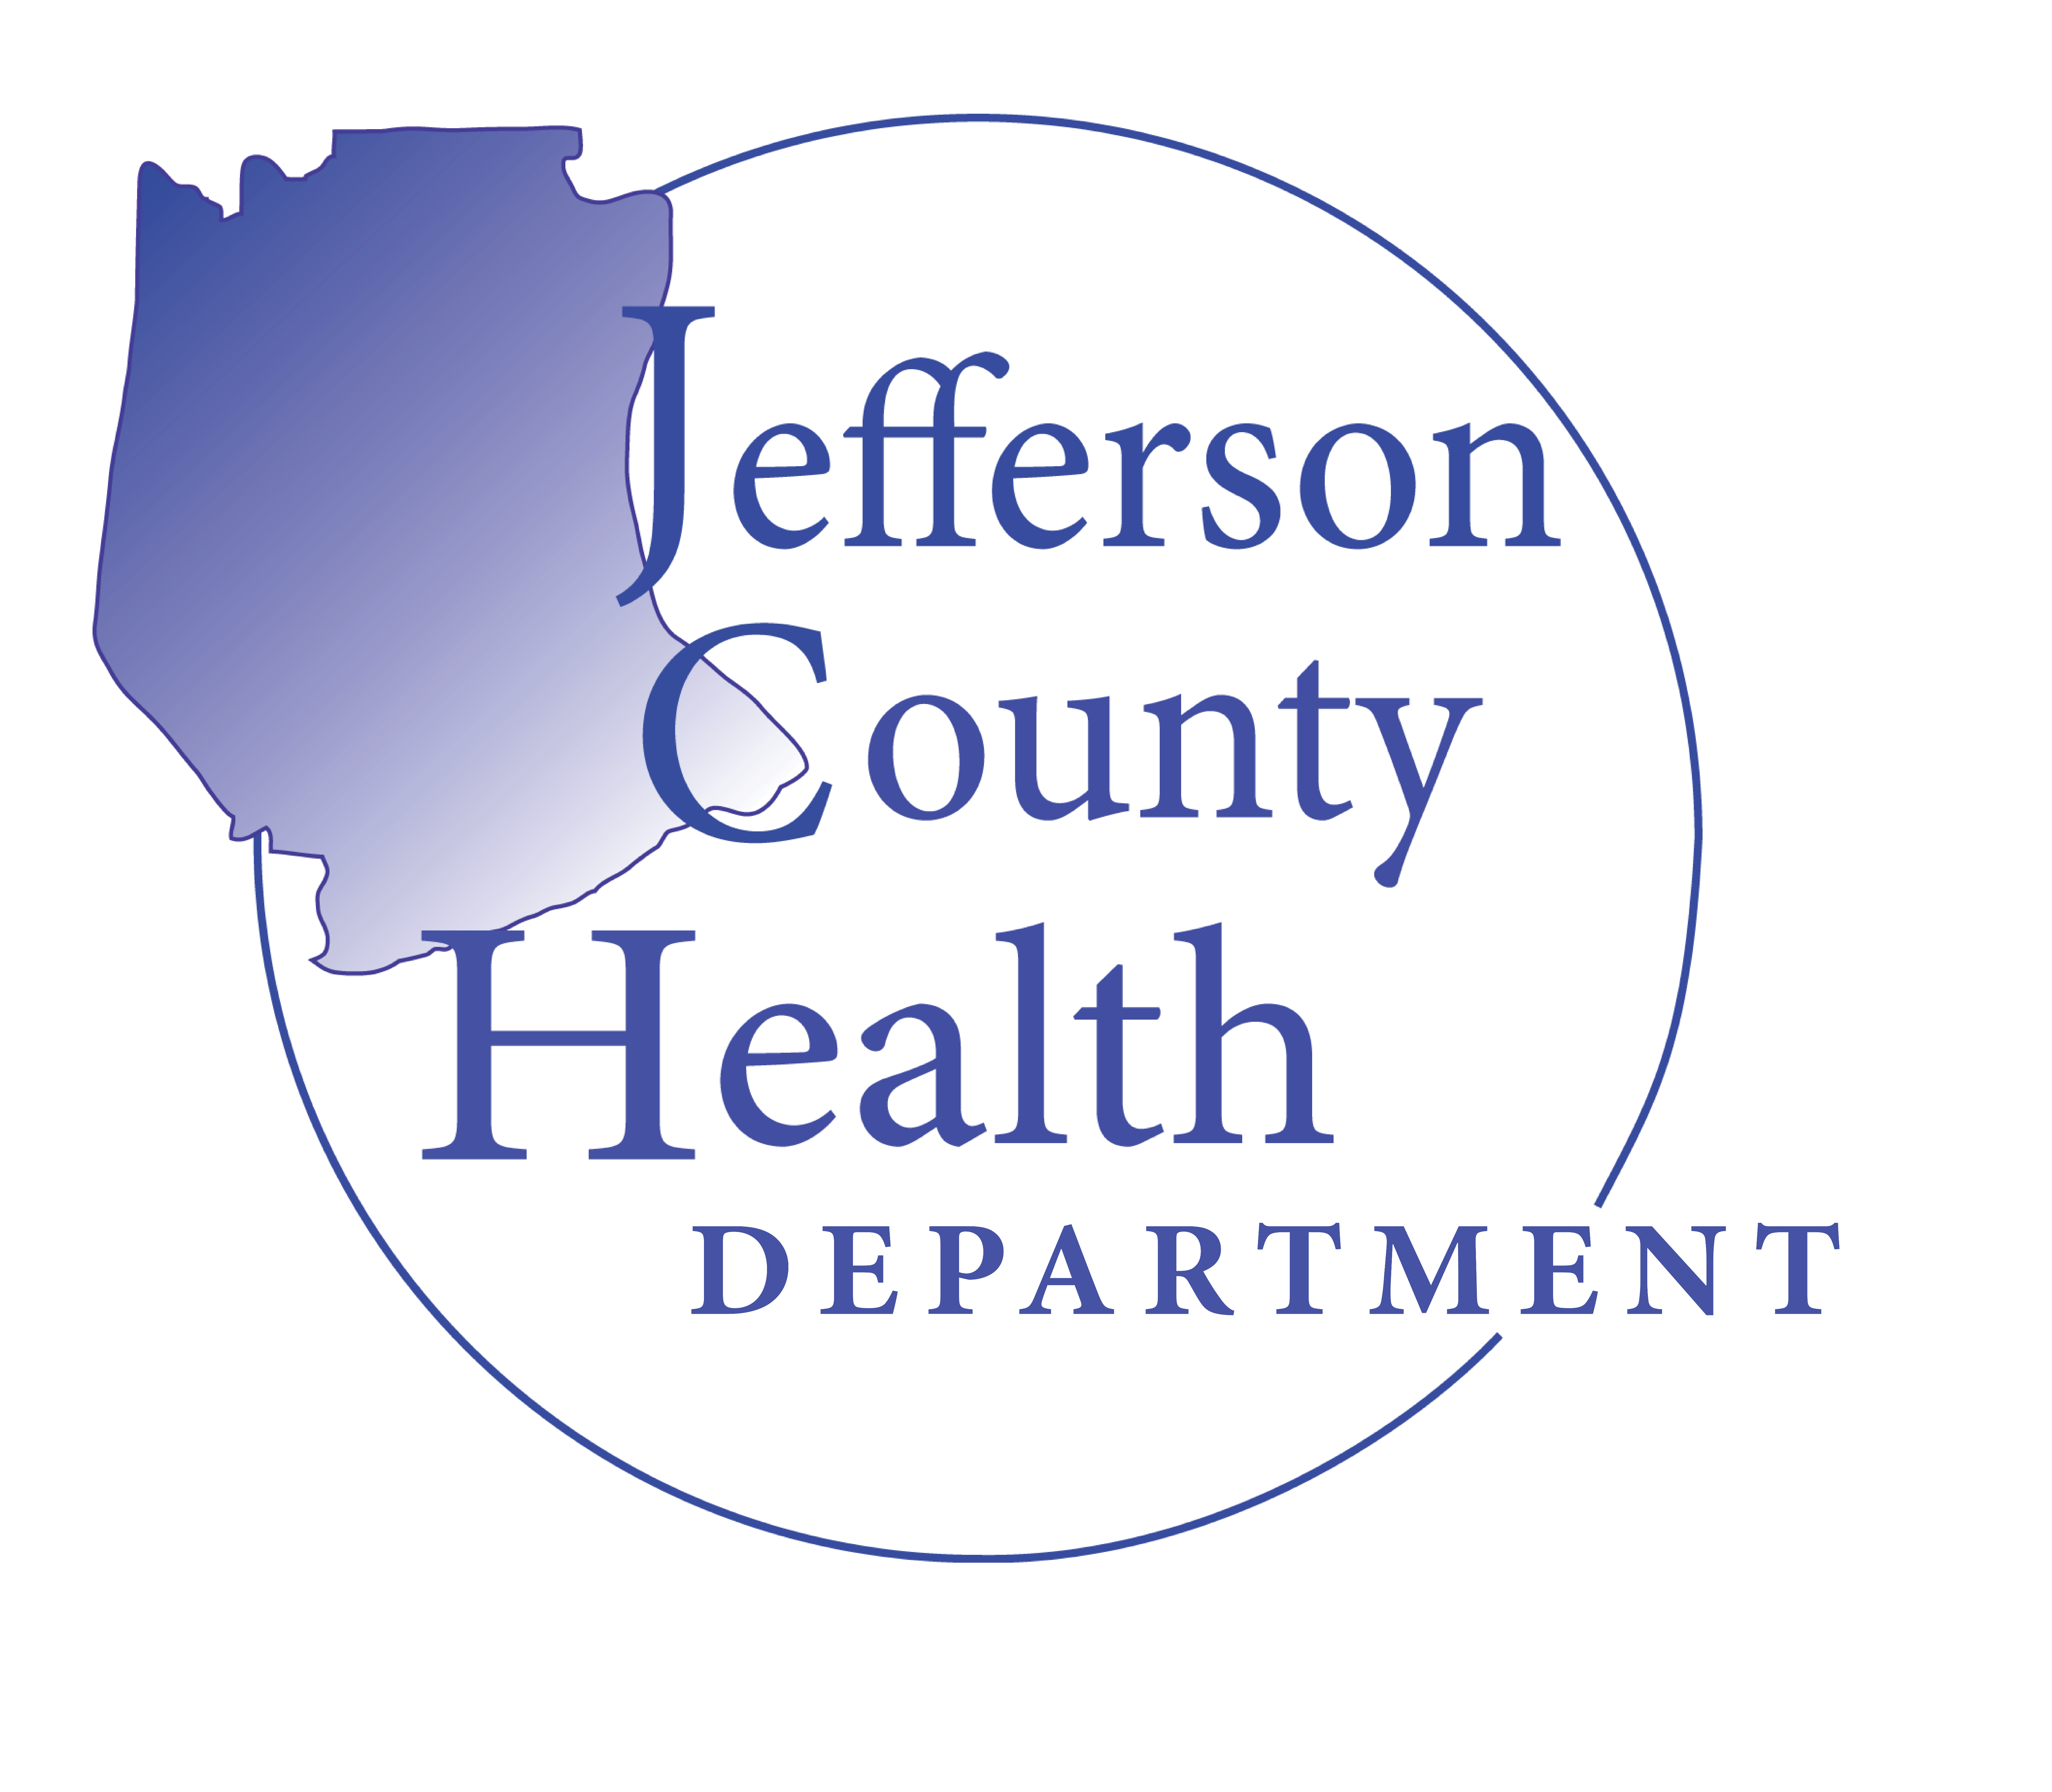 Jefferson County Health Department Job Opportunities